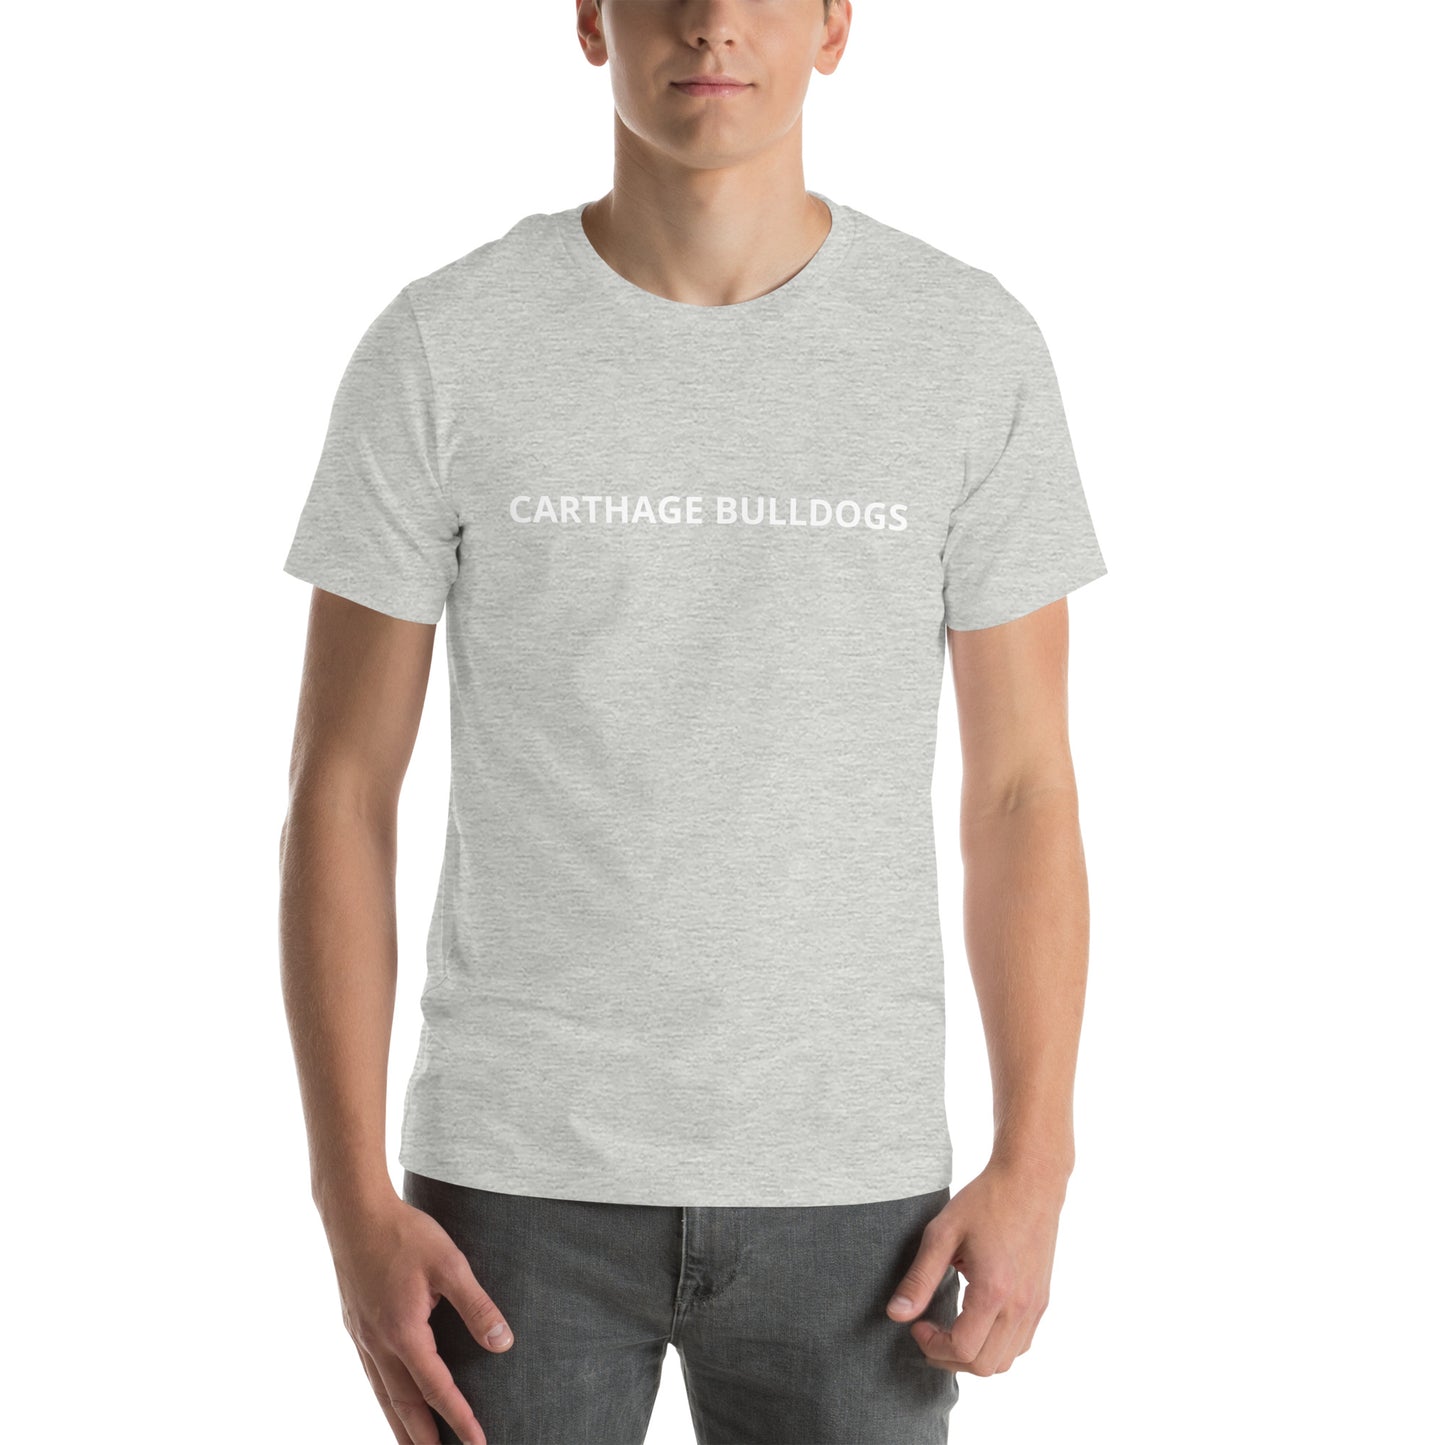 CARTHAGE BULLDOGS Unisex t-shirt